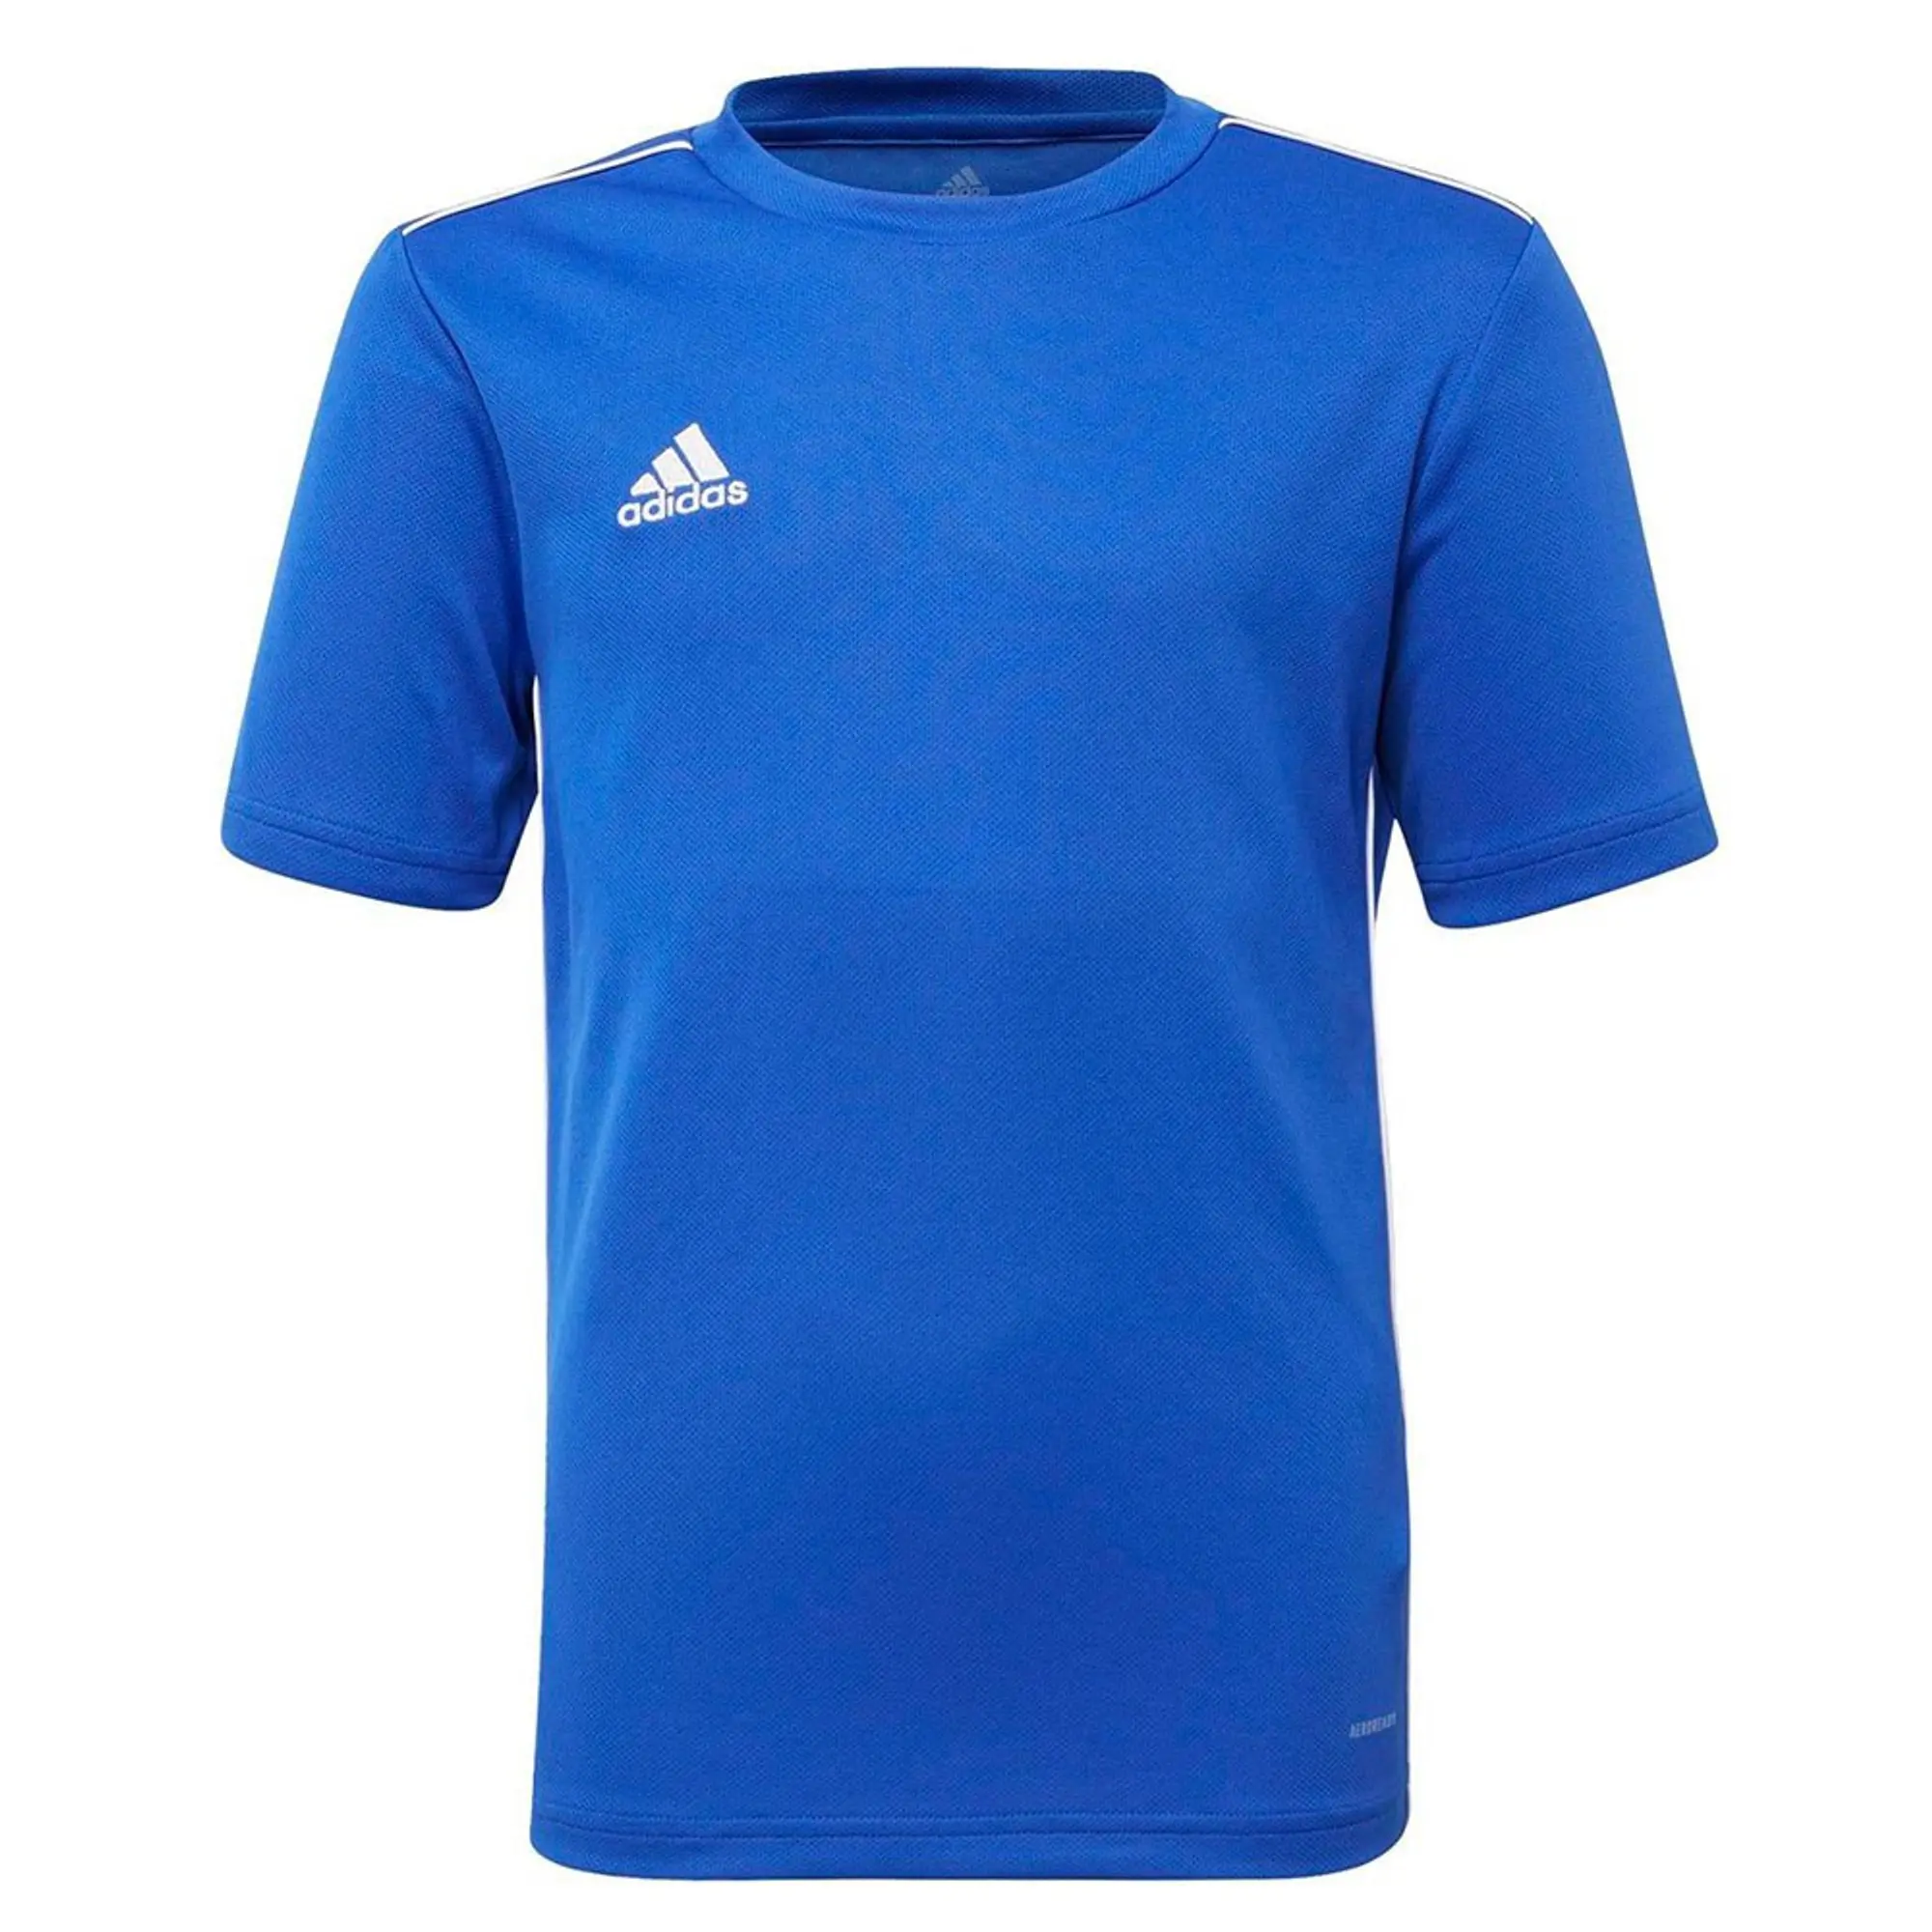 adidas Football Team Core 18 Jersey - Blue